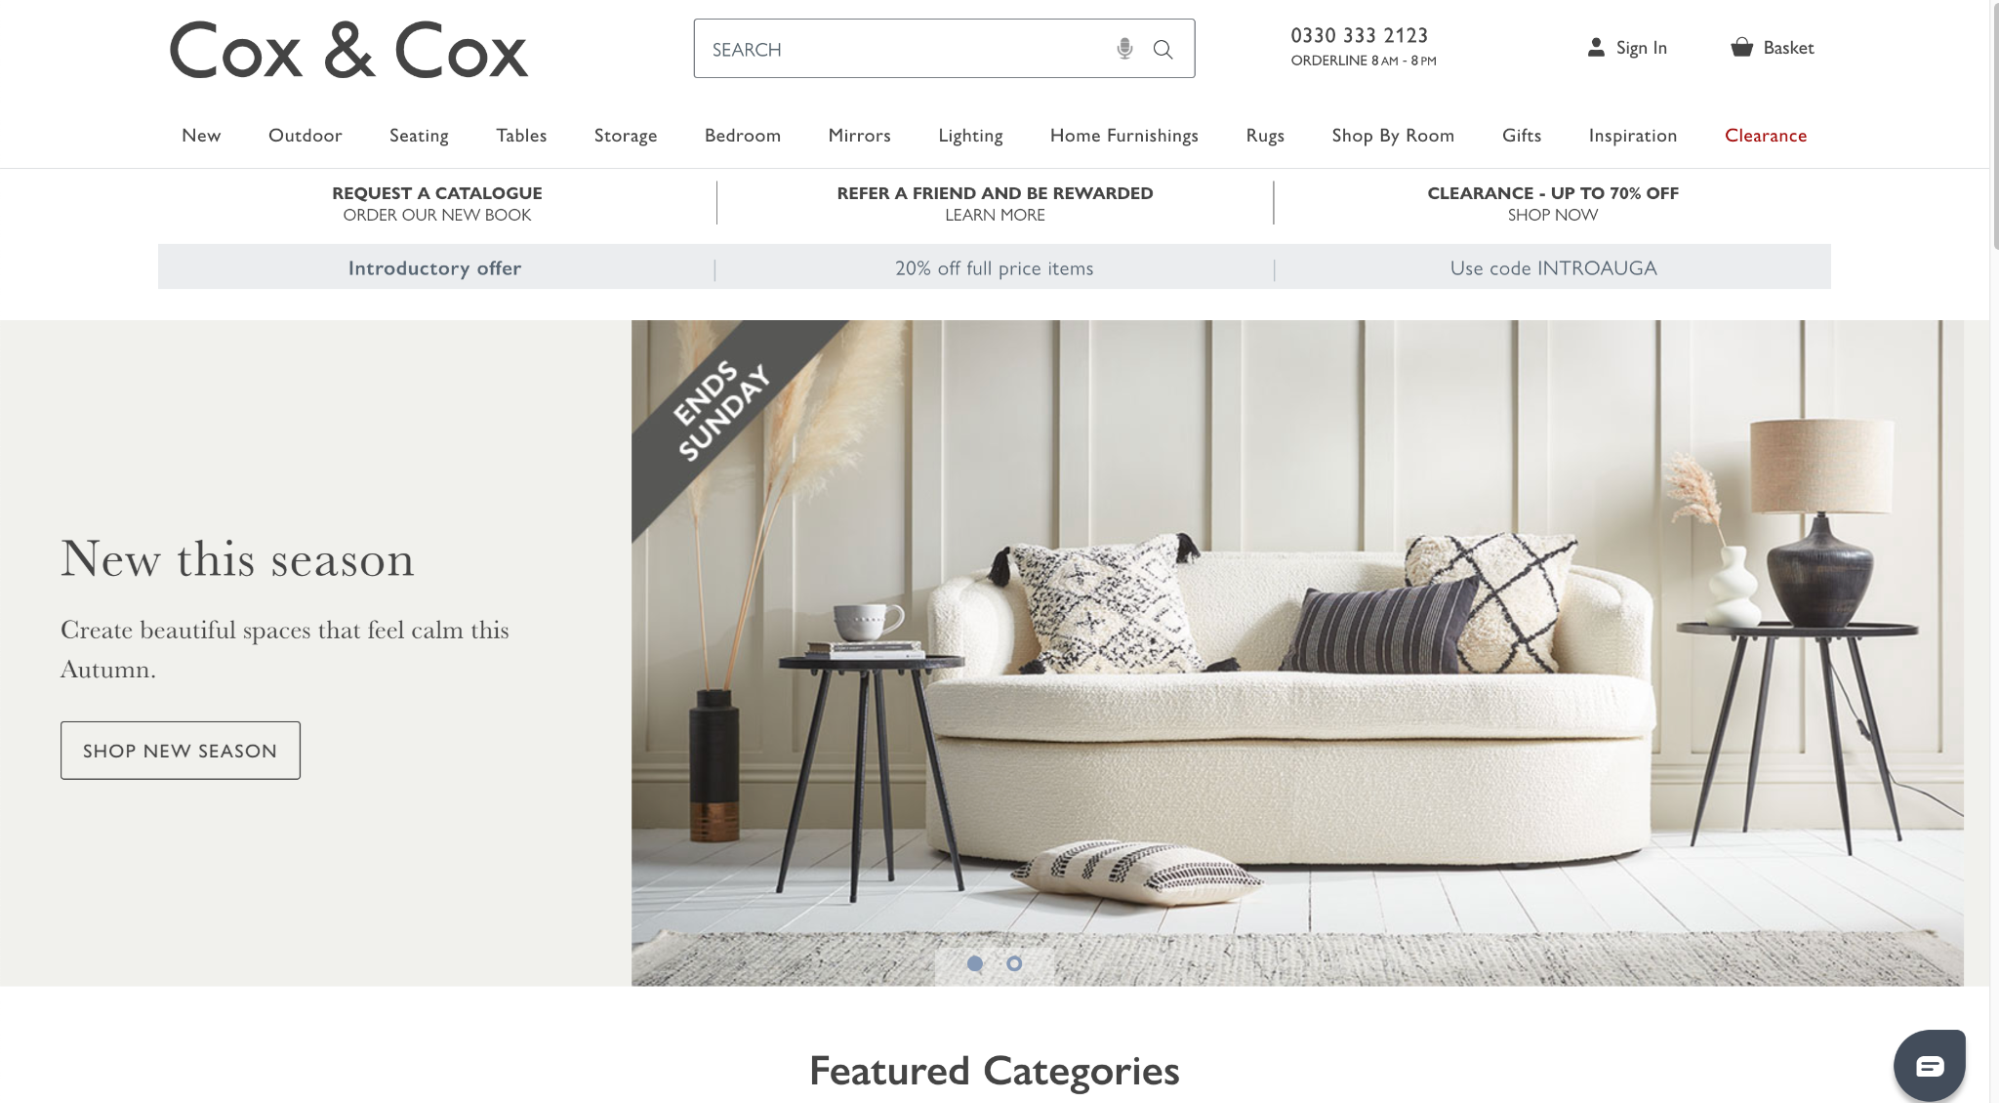 Cox and COx Adobe Commerce site adobe commerce